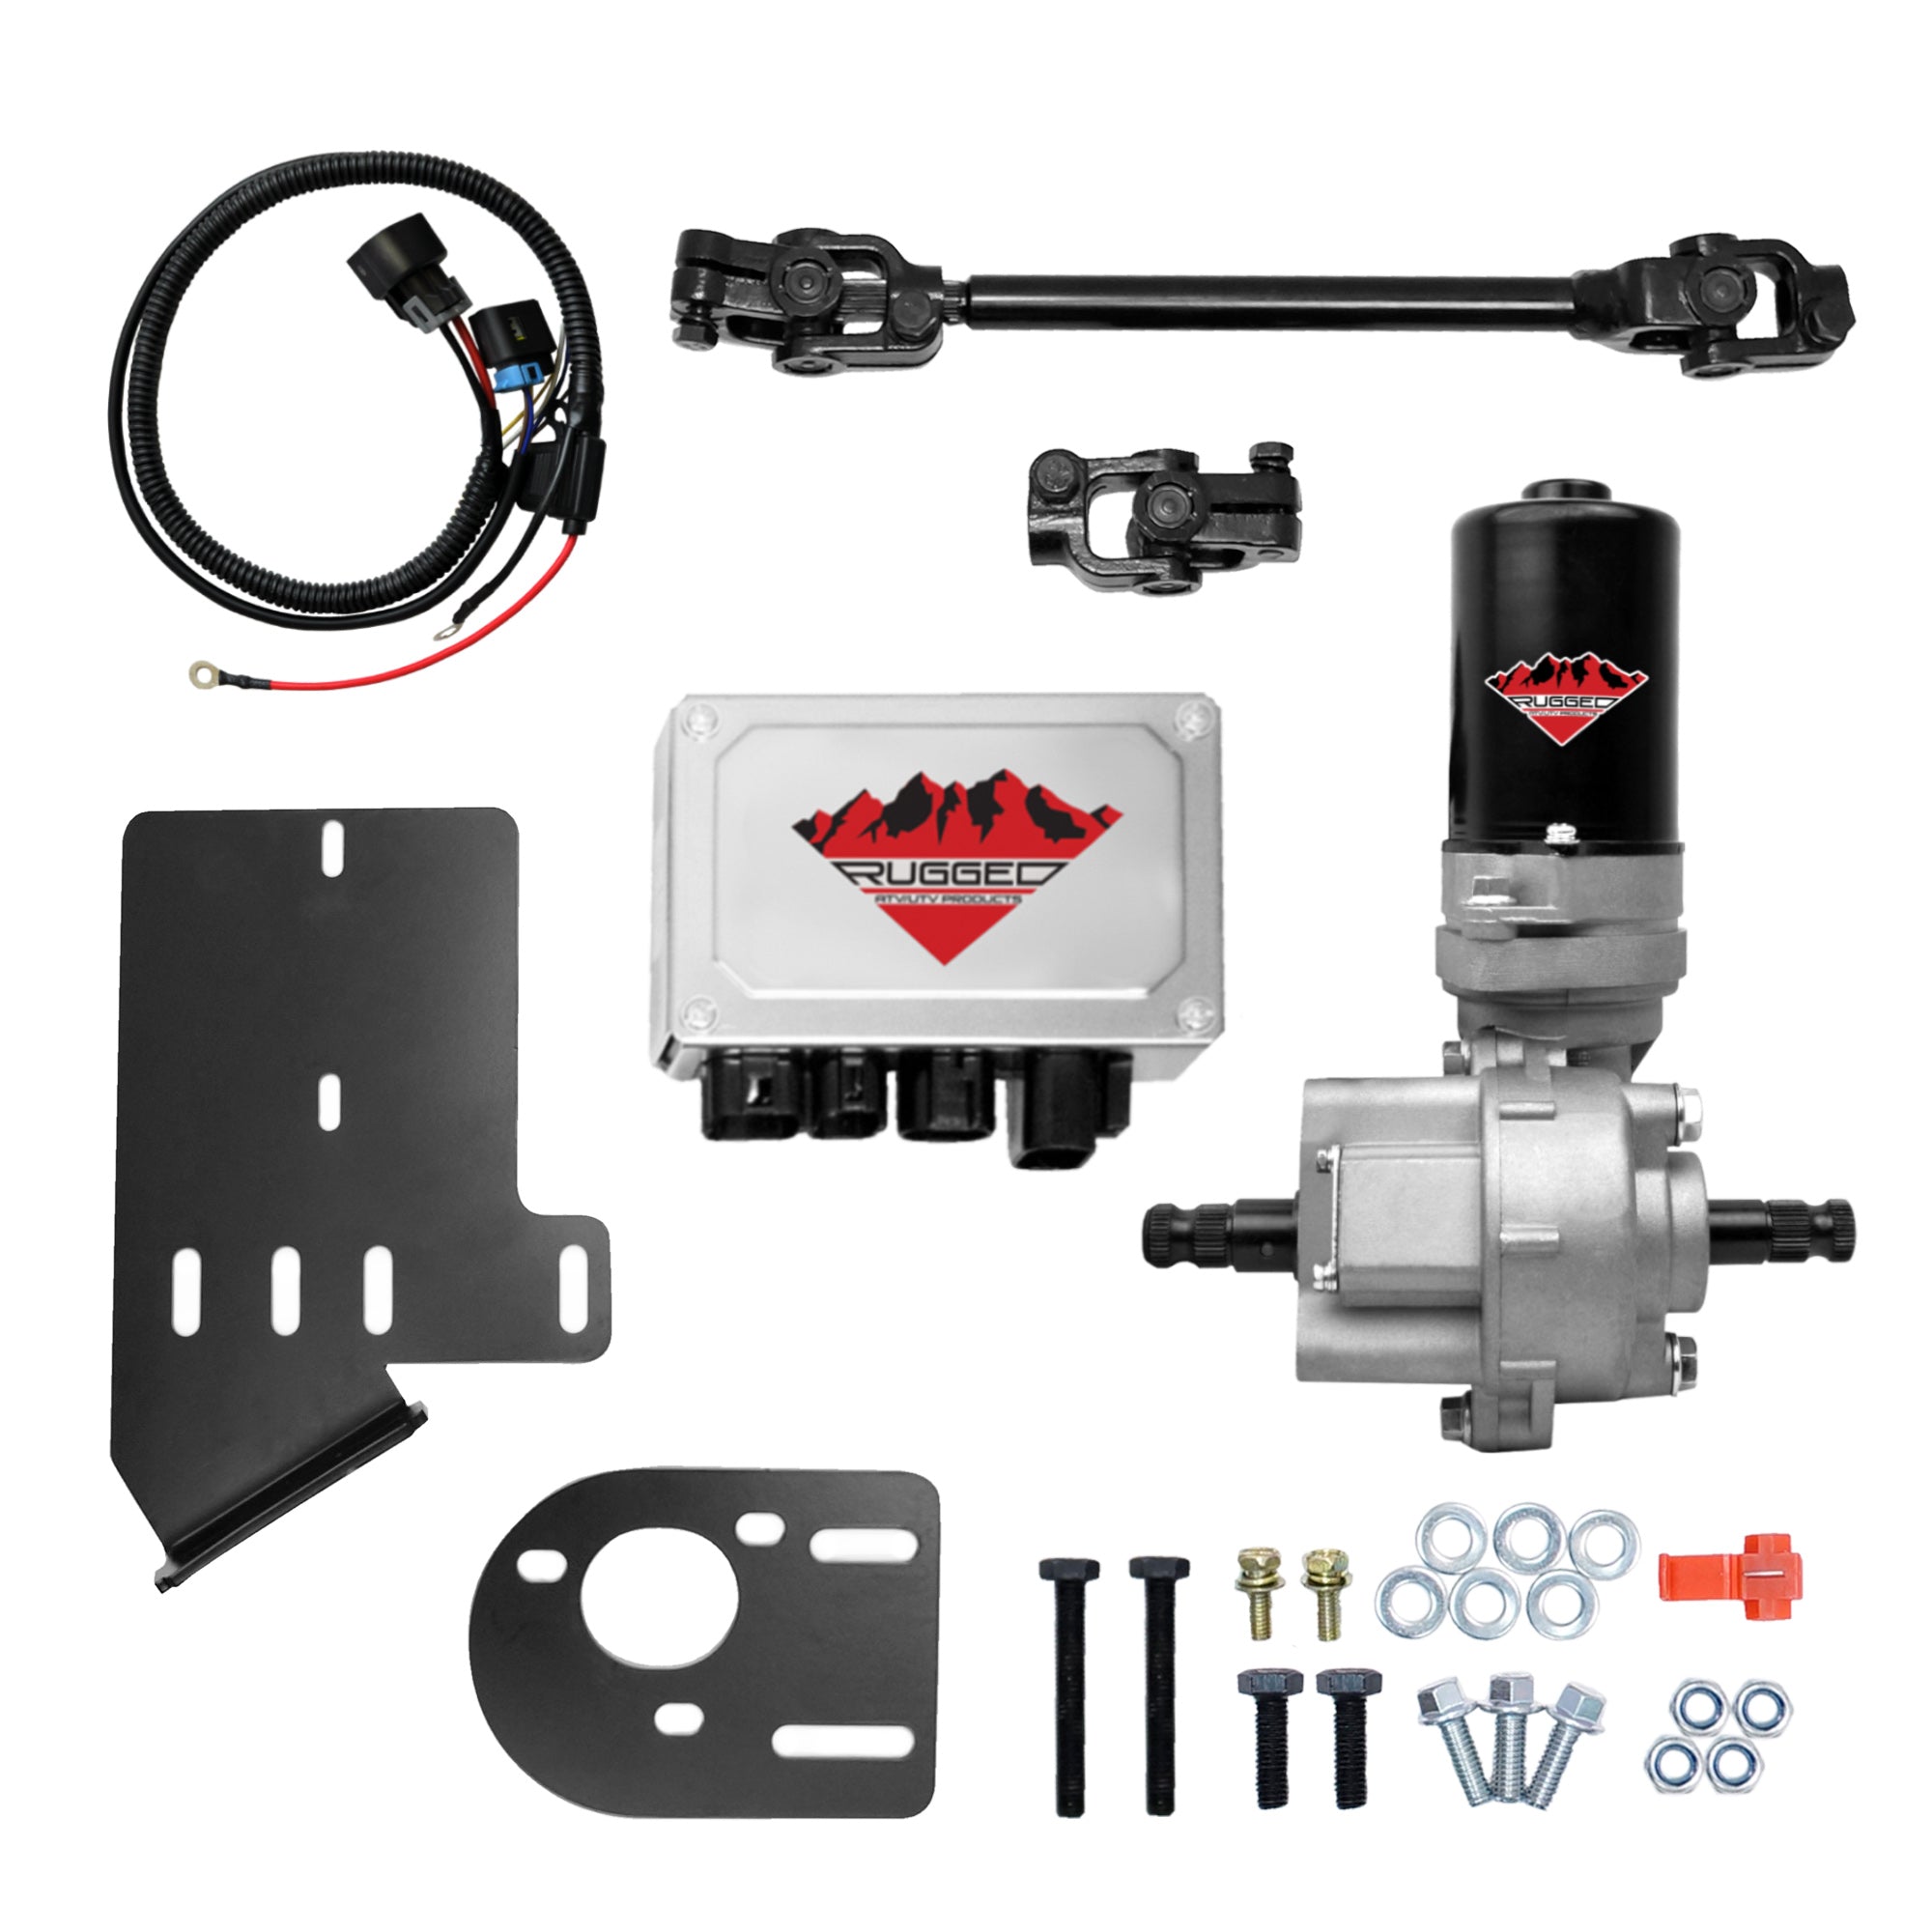 Electric Power Steering Kit for Yamaha Rhino 660 